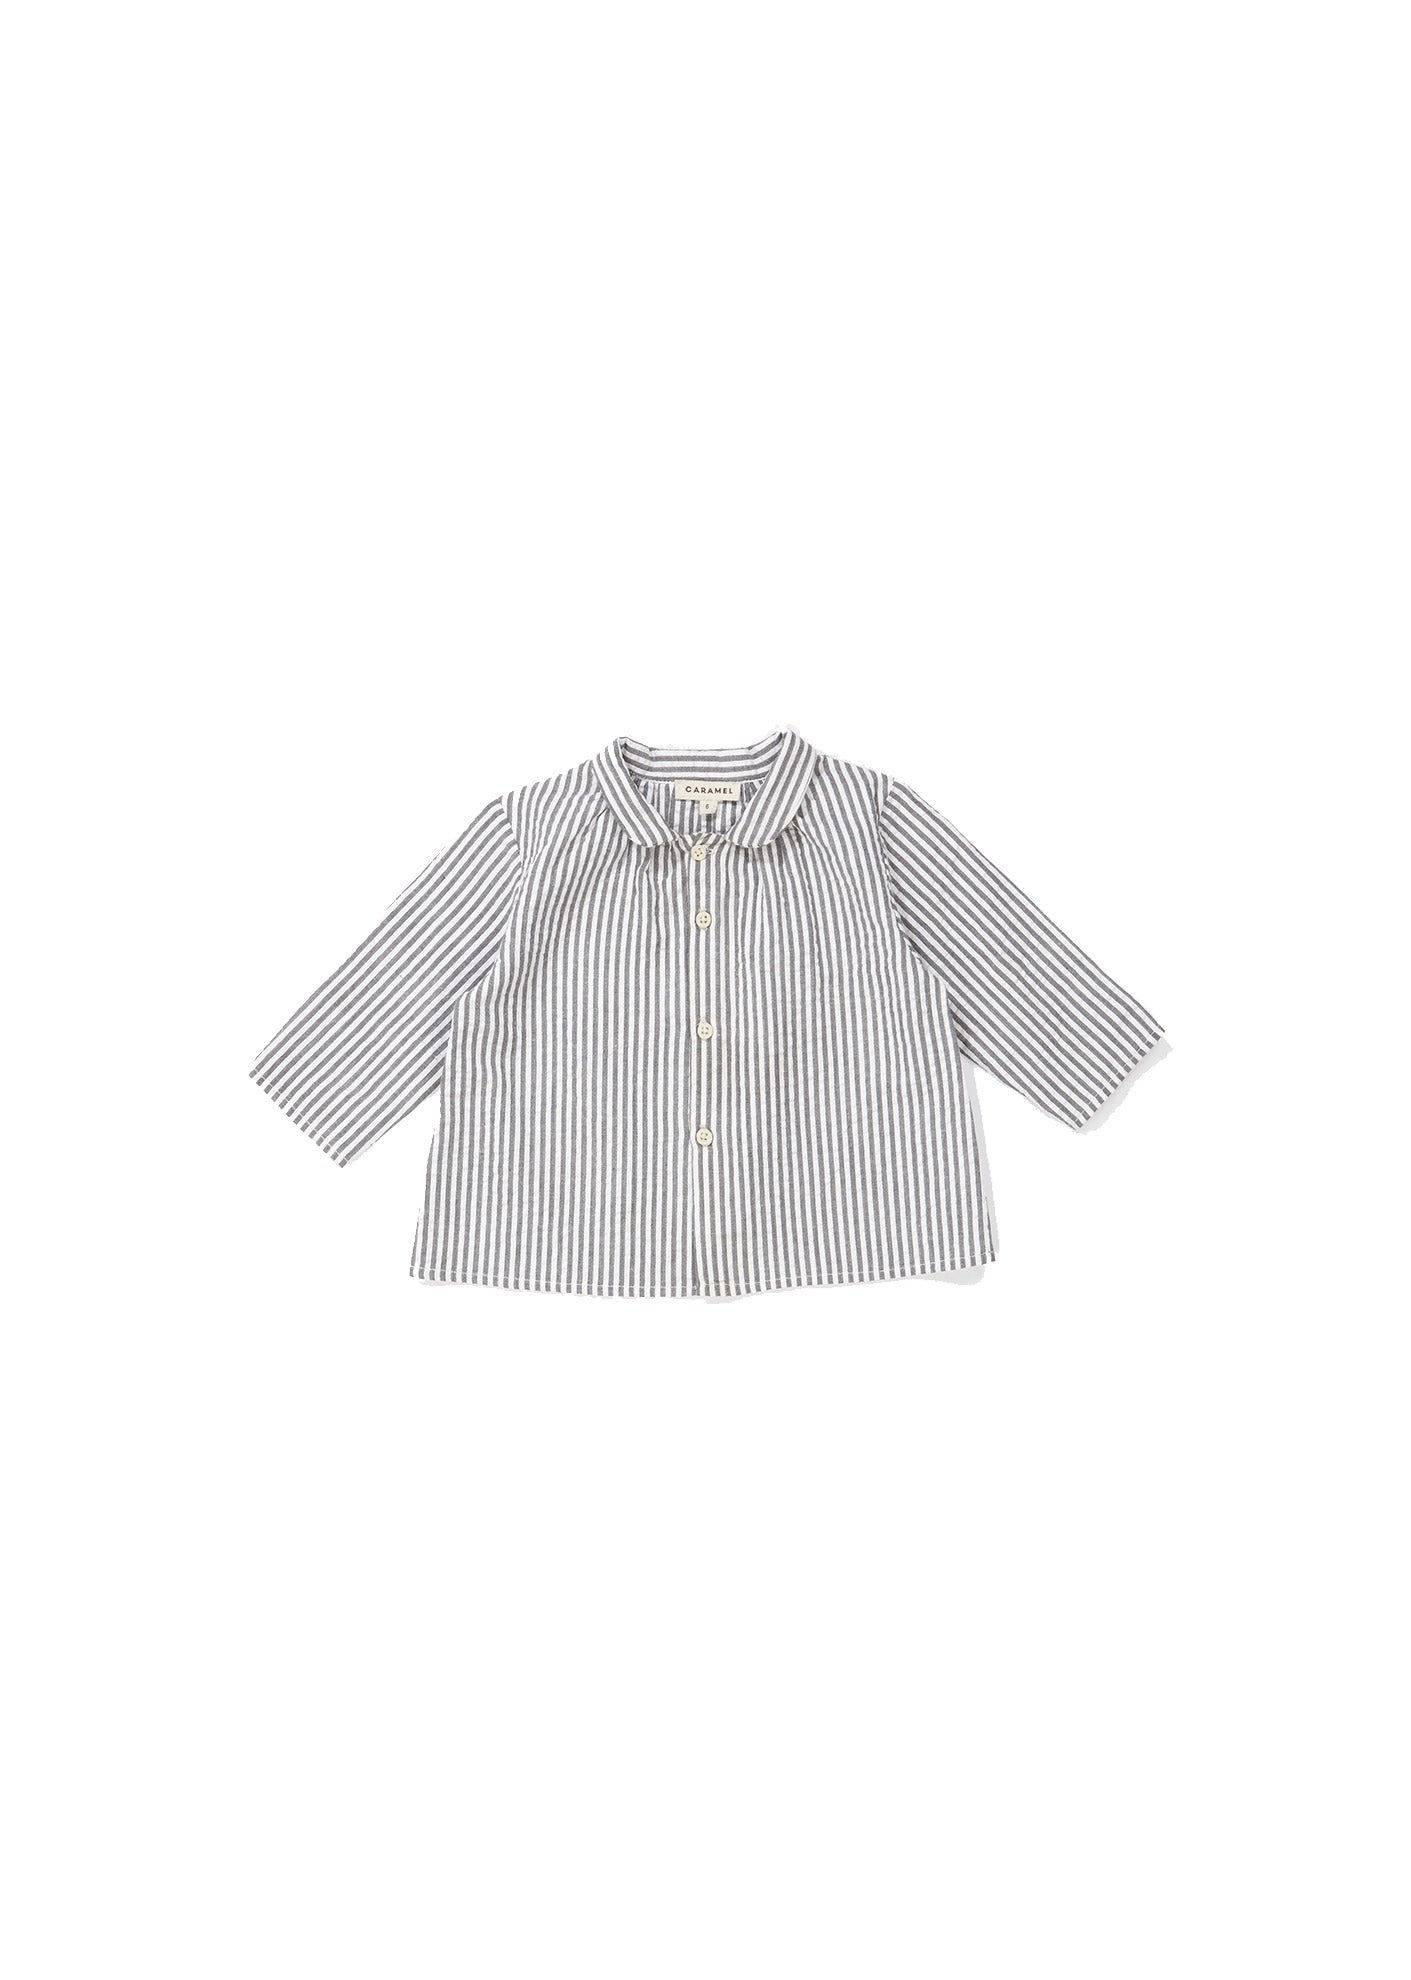 Baby Boys Light Grey Striped Cotton Shirt